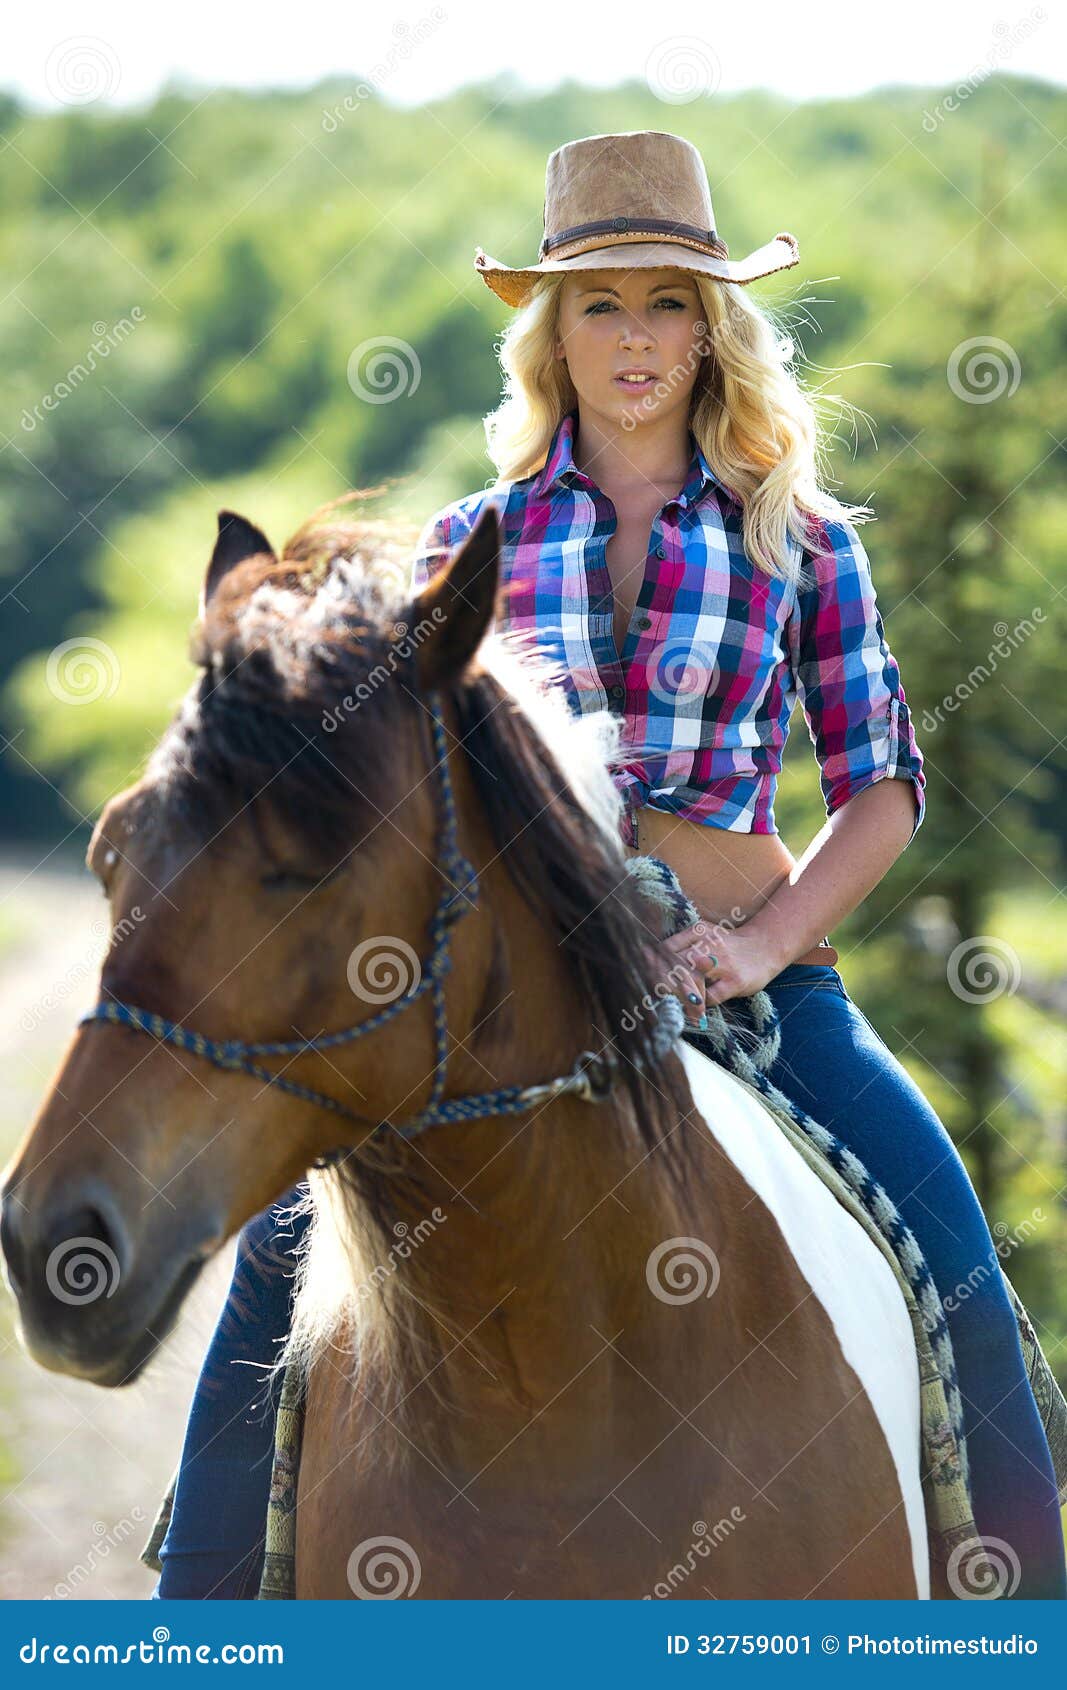 Western Beauty On Horse Stock Image